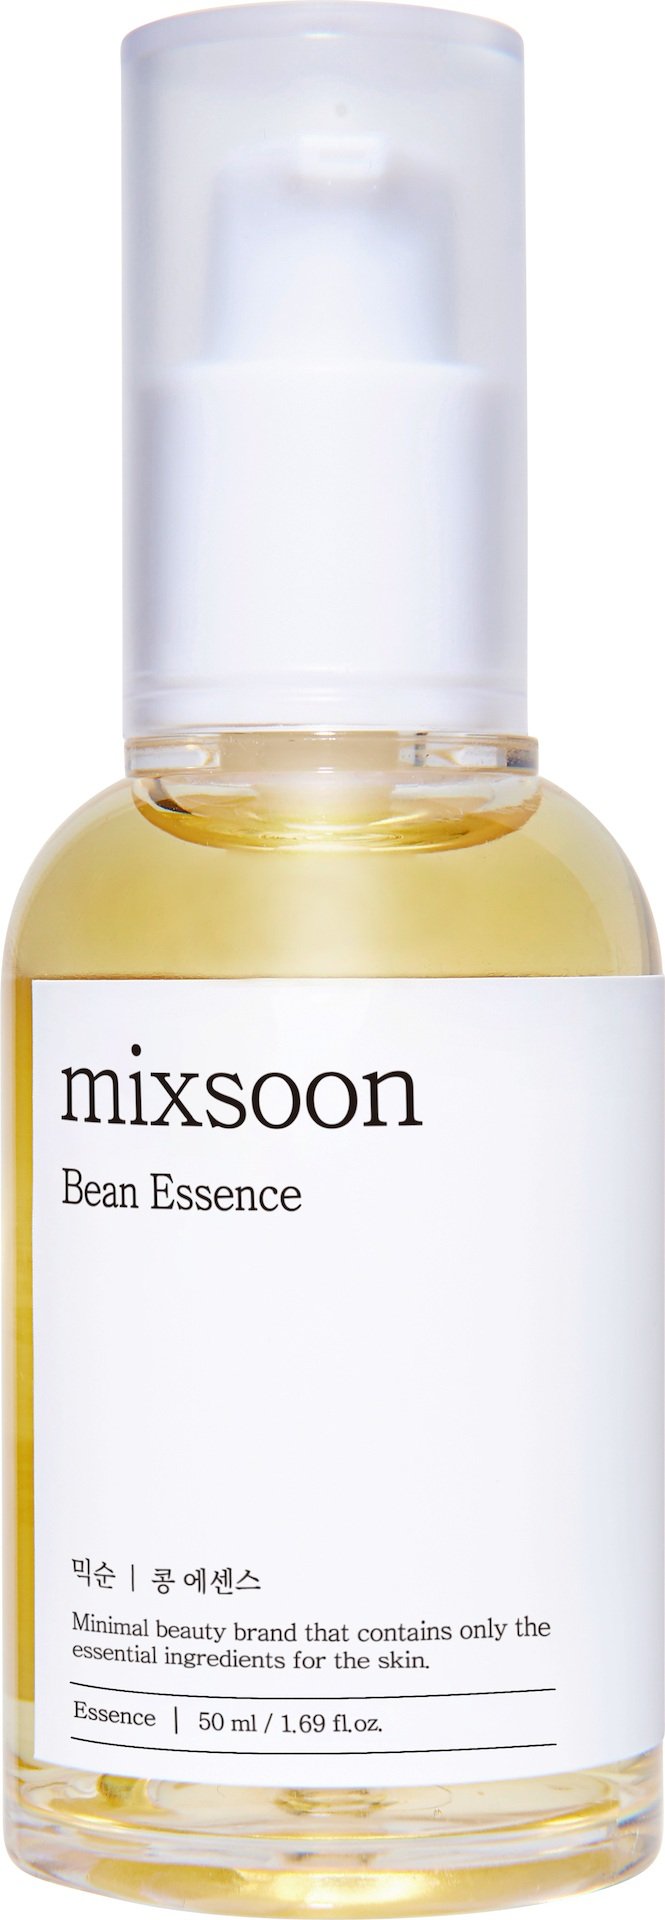 Mixsoon Bean Essence 50ml